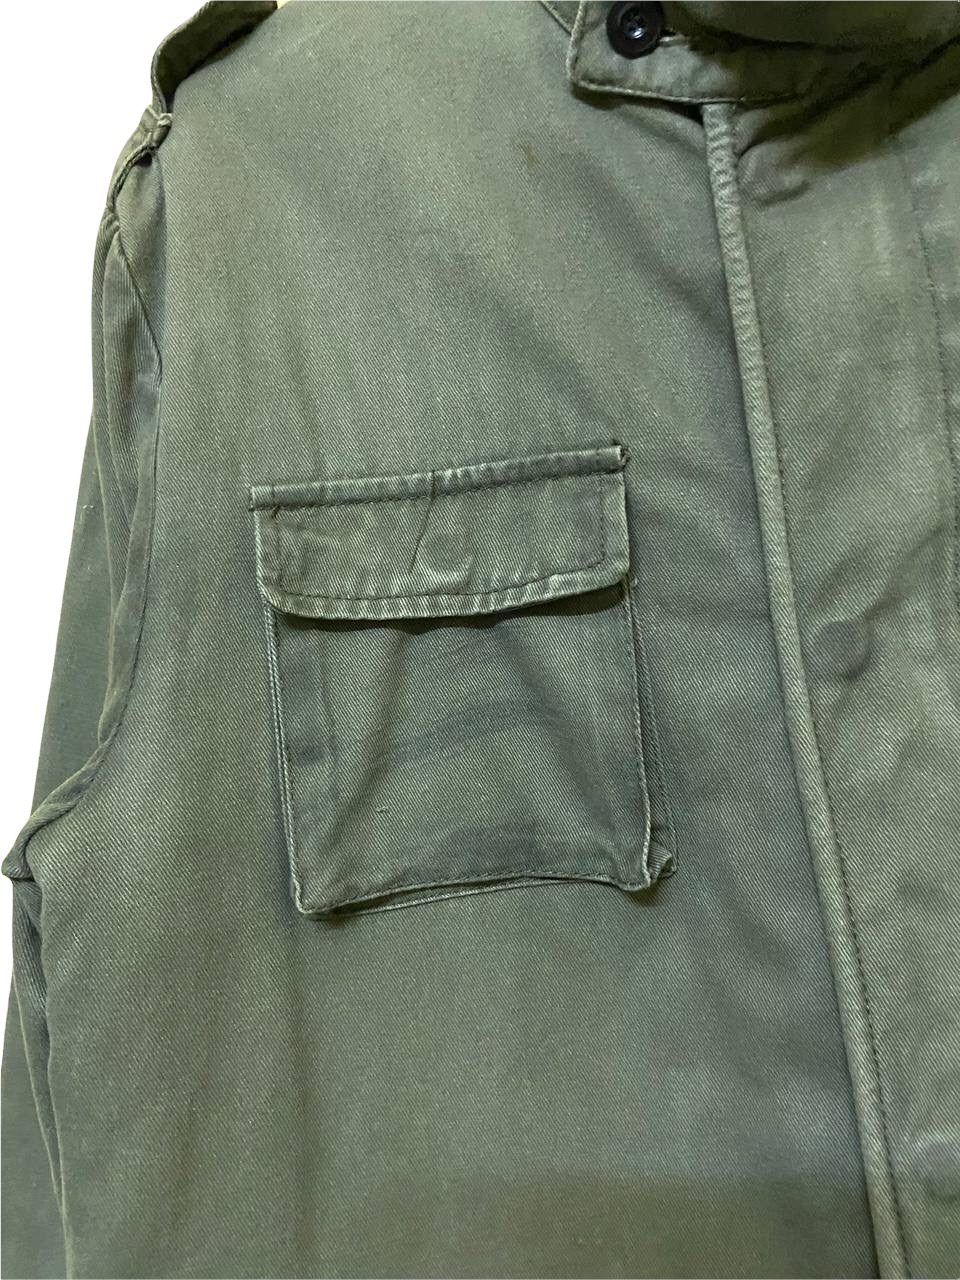 N Hollywood Fishtail Army Jacket - 3